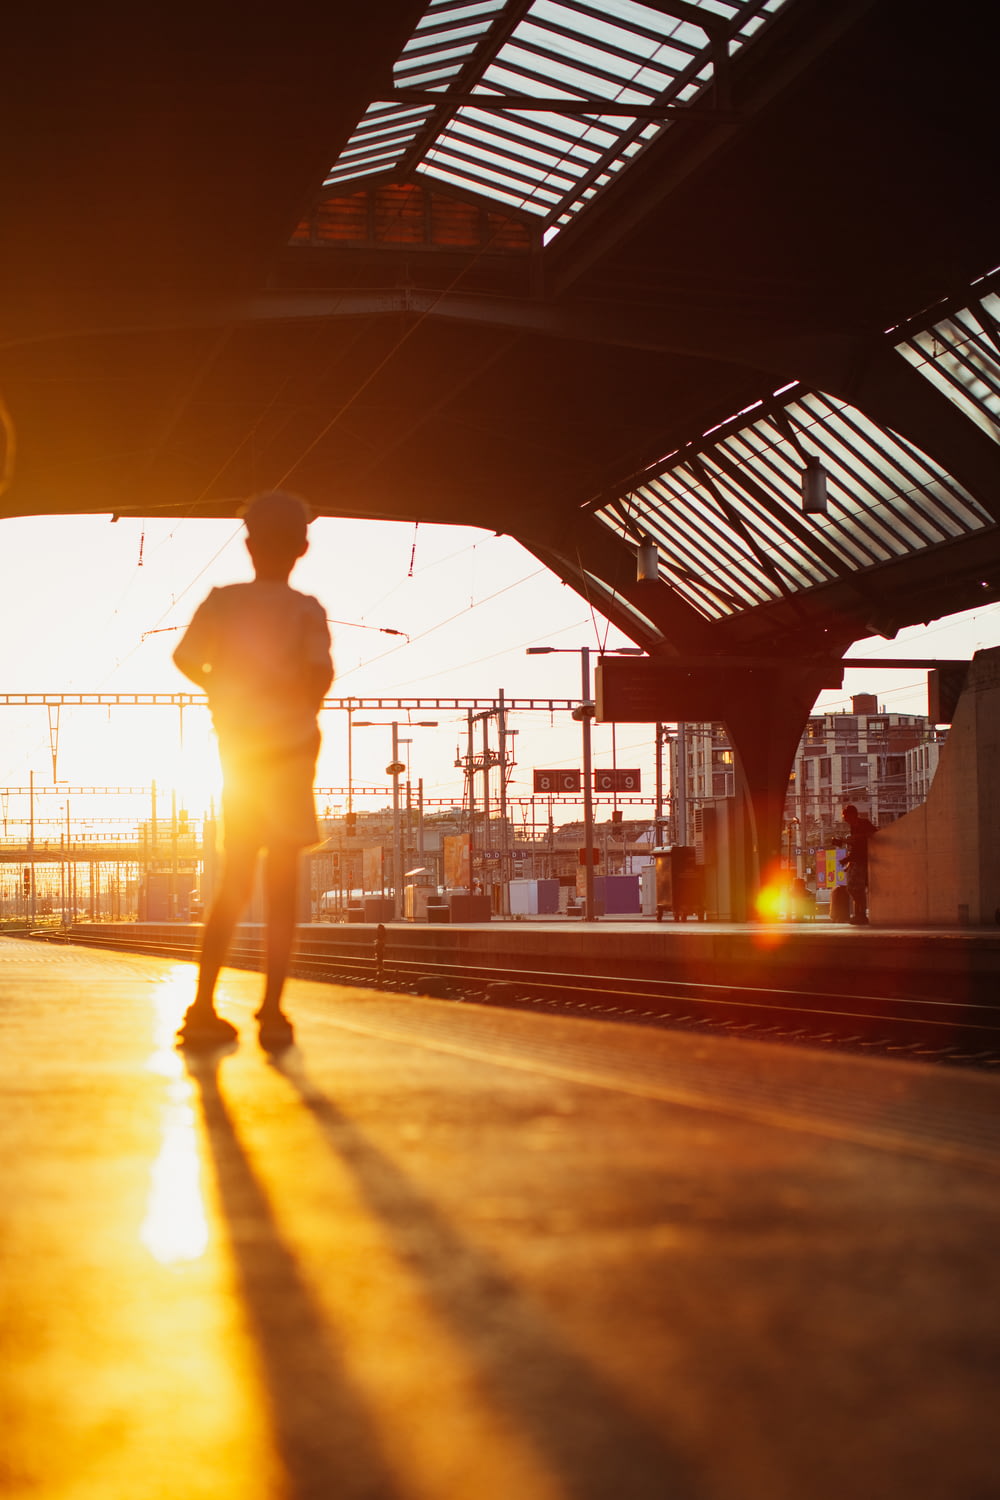 a person walking on a train platform